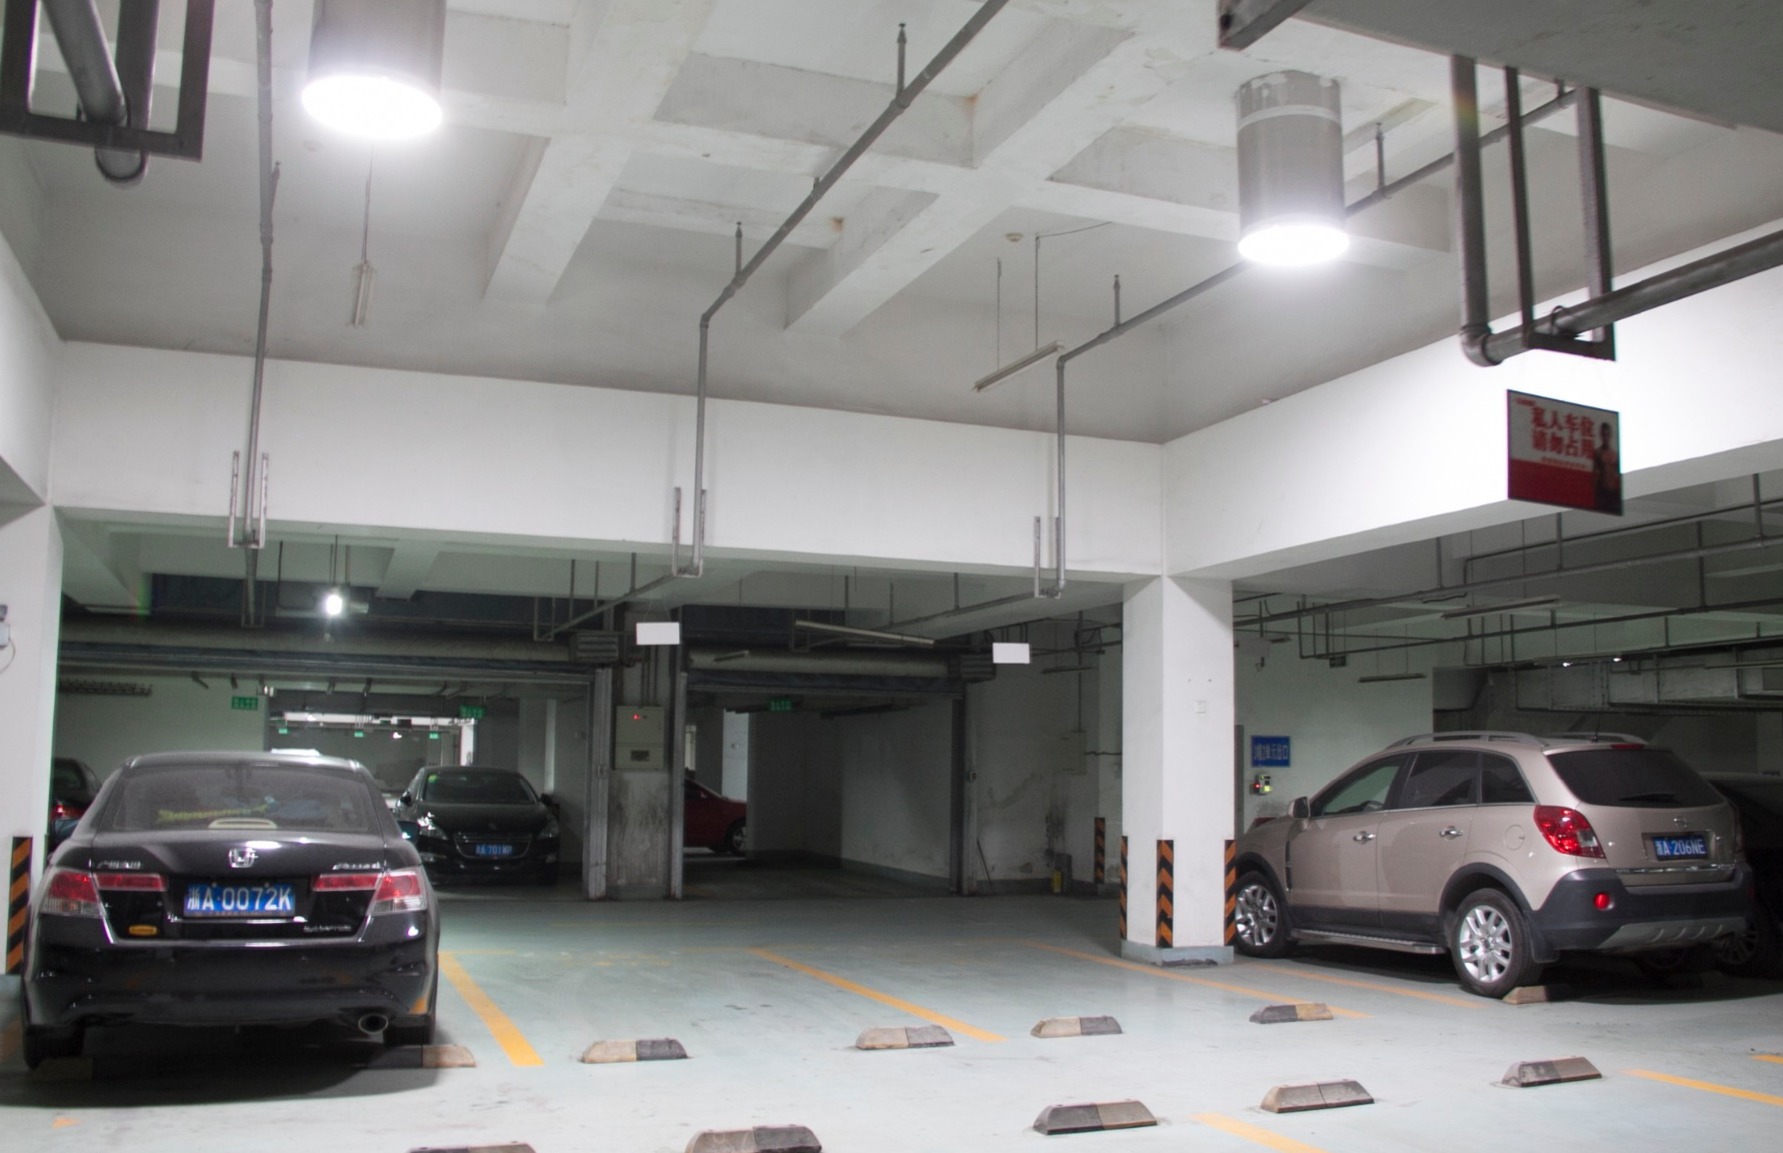 Underground car park brightened by Solatube Daylighting Systems